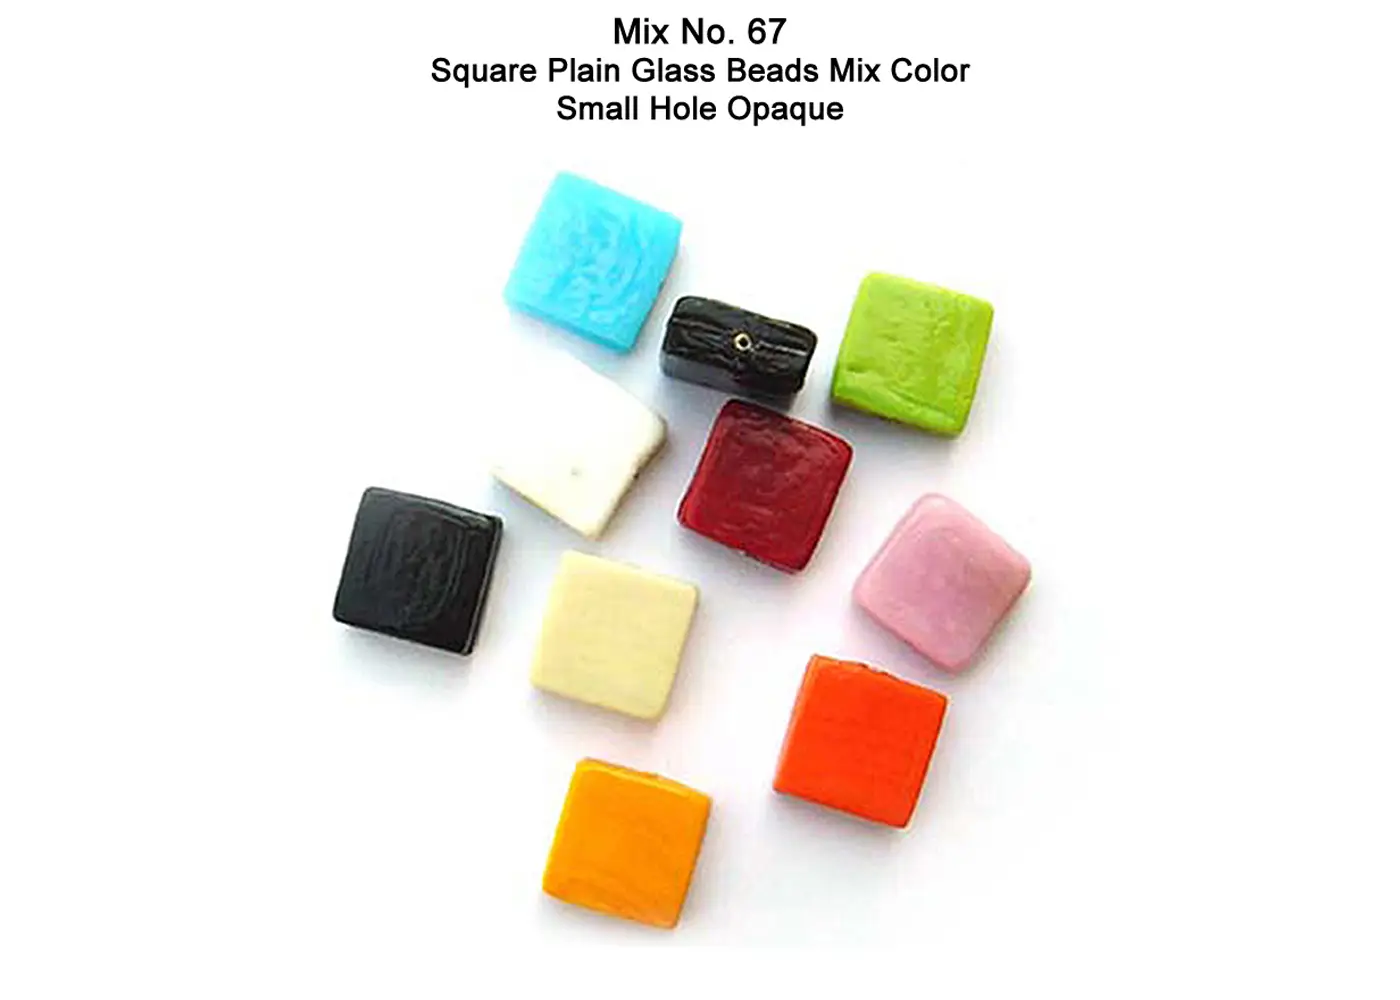 Square Plain glass bead mix color small hole opaque